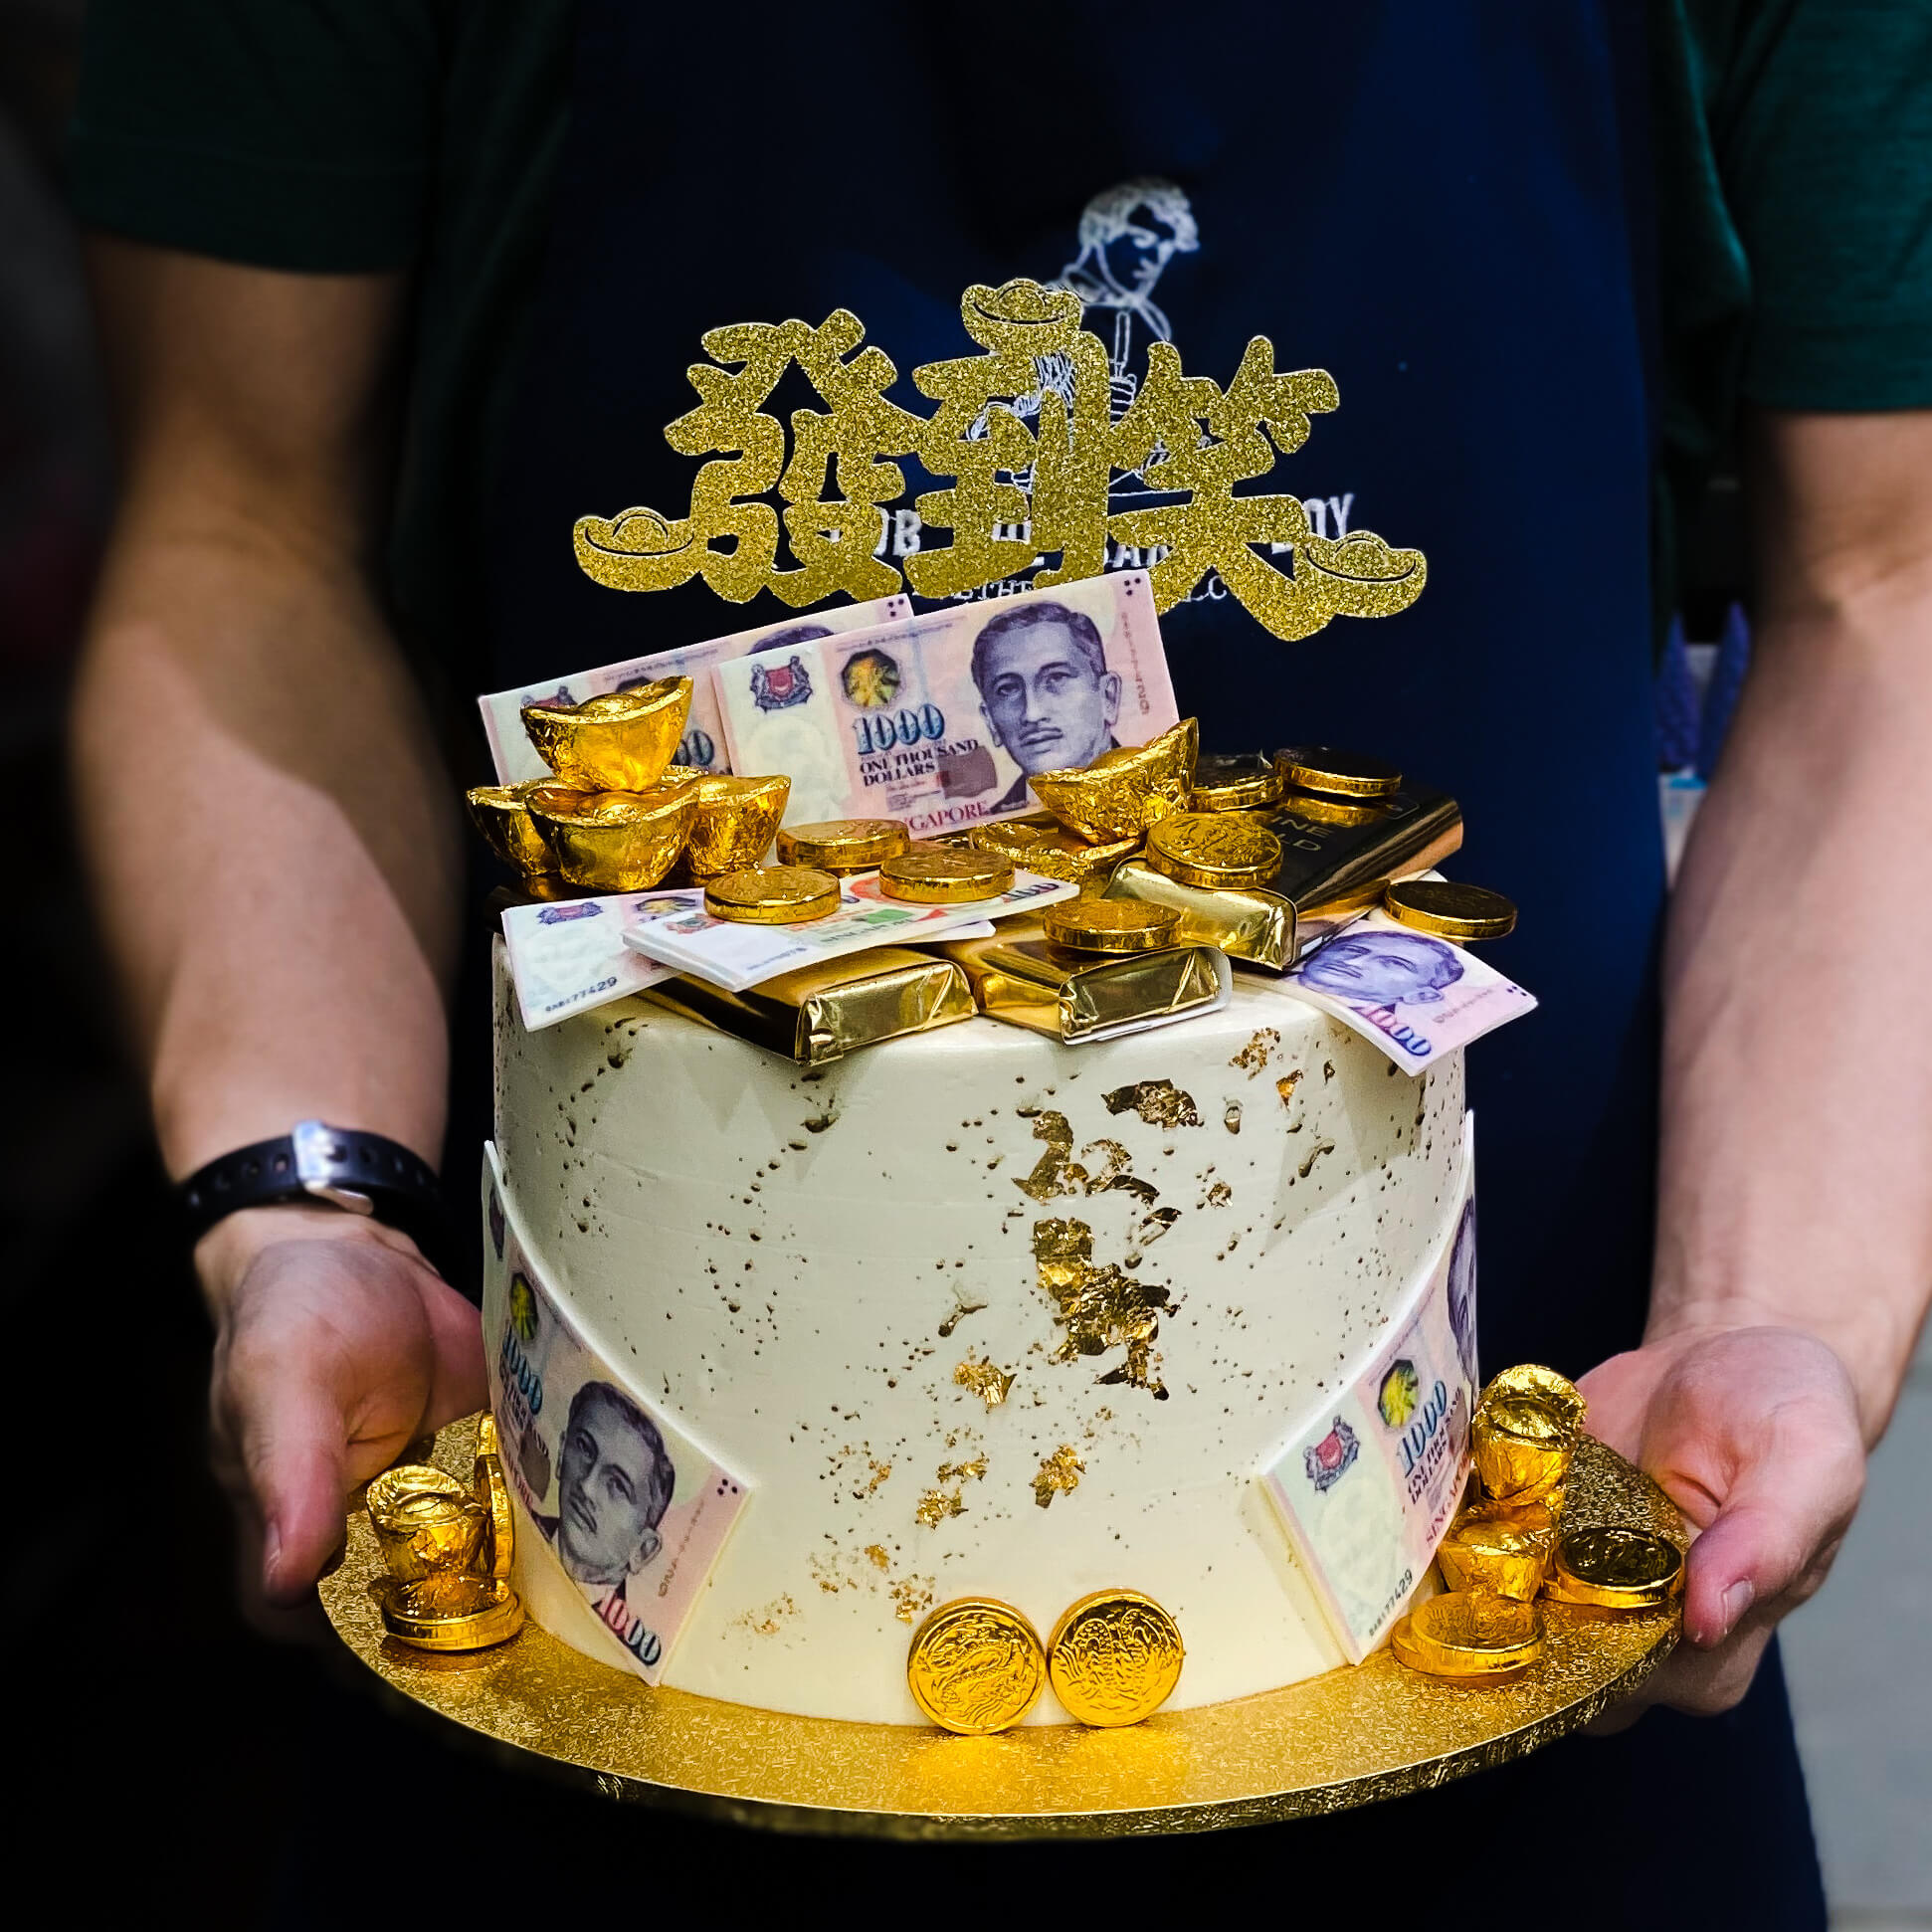 money pulling cakes in Singapore